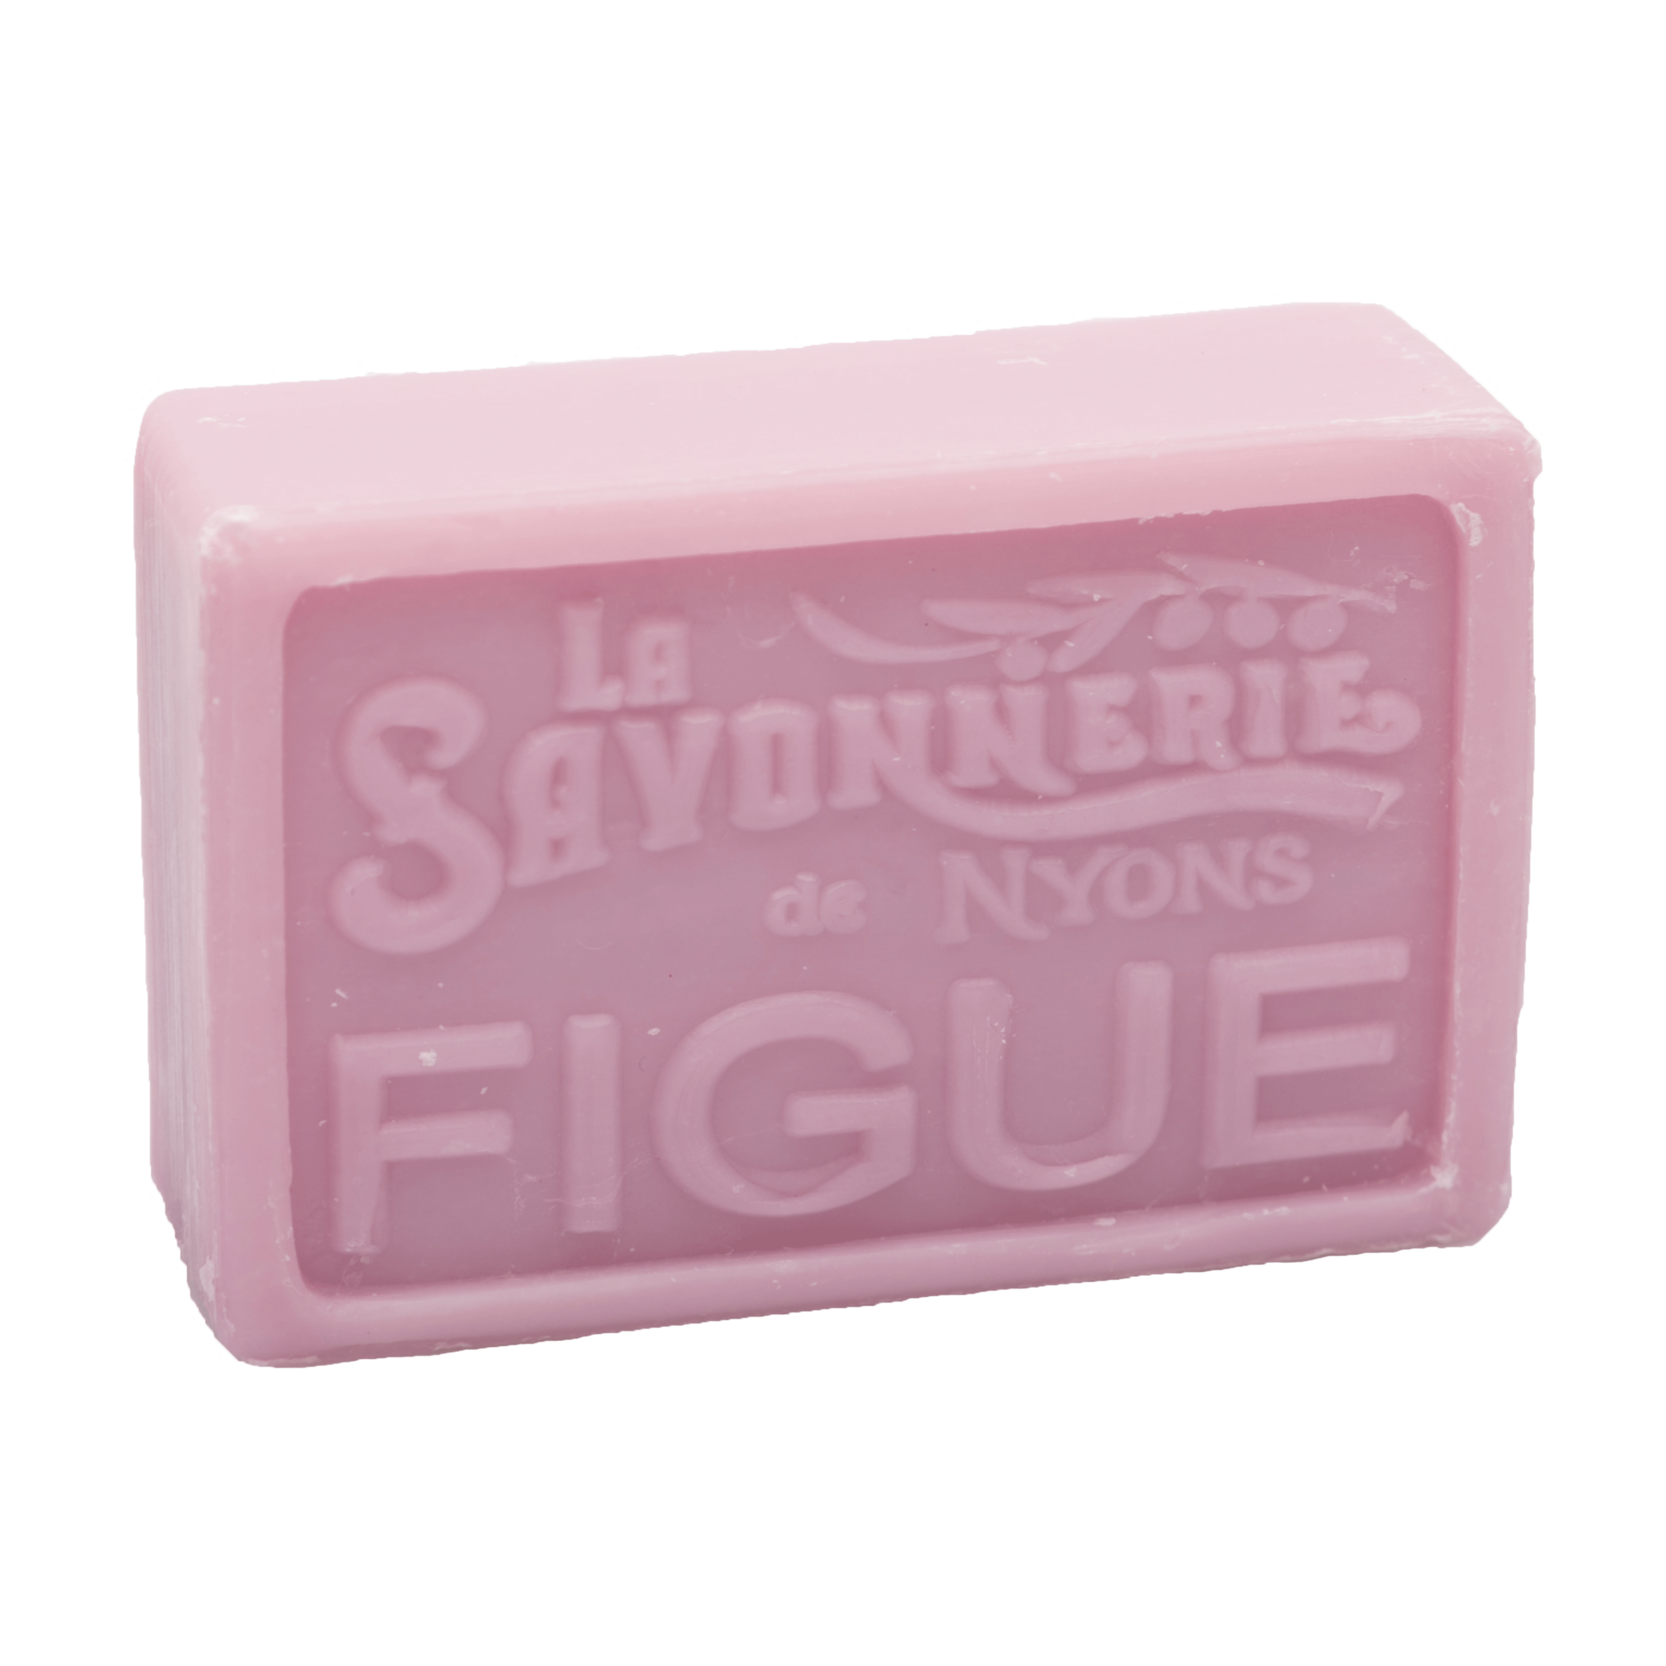 Pink bar of soap that reads La Savonnerie de Nyons Figue.